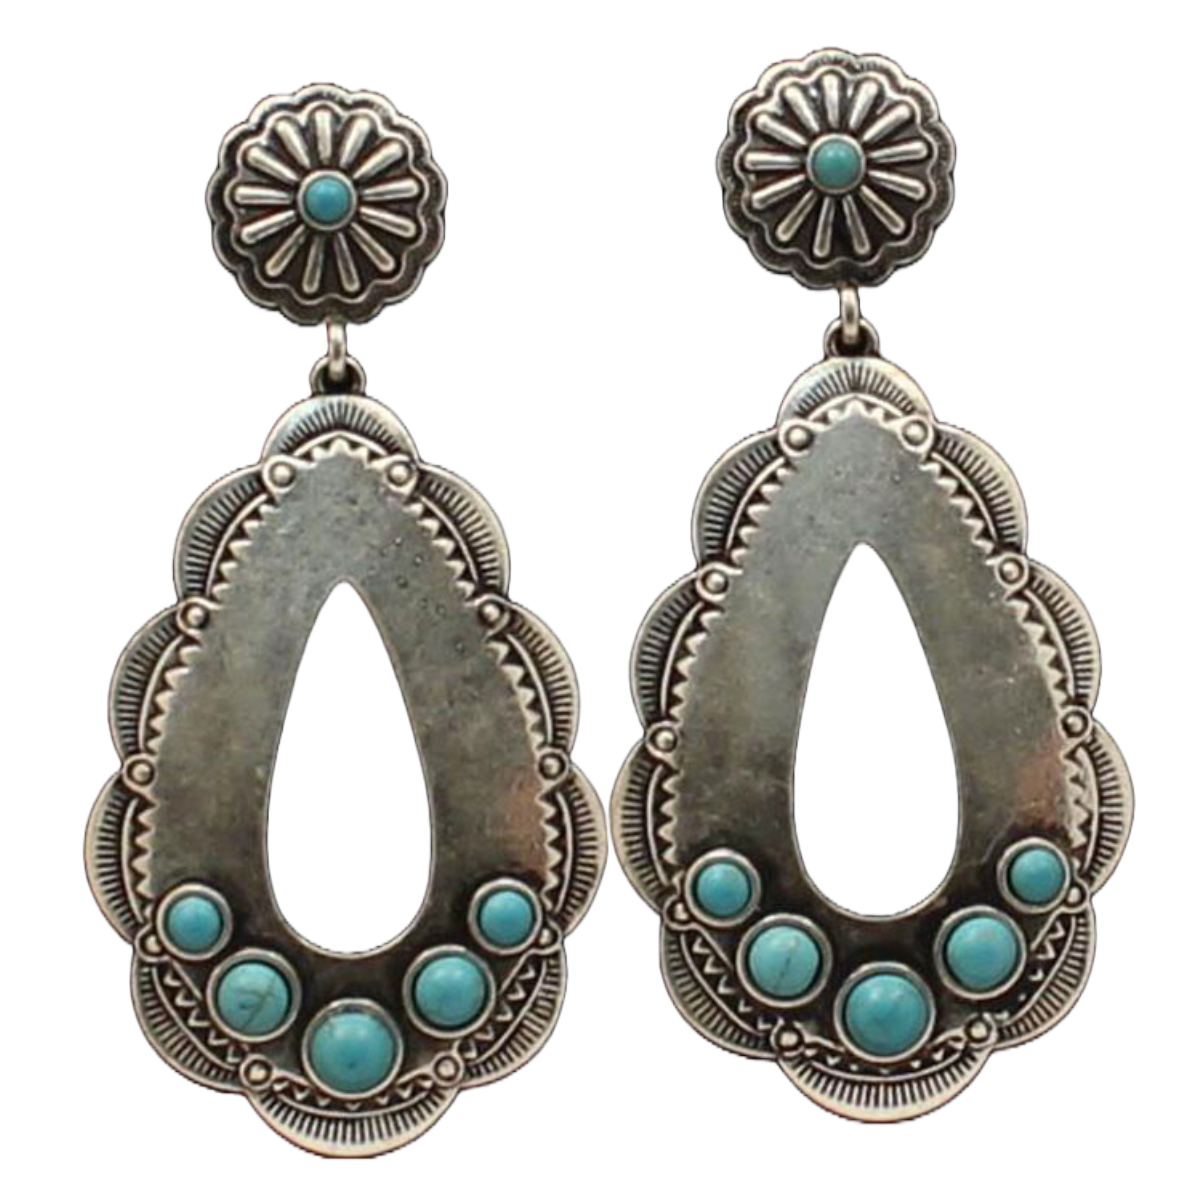 M&F Western Ladies Oval Silver & Turquoise Earrings D4600120